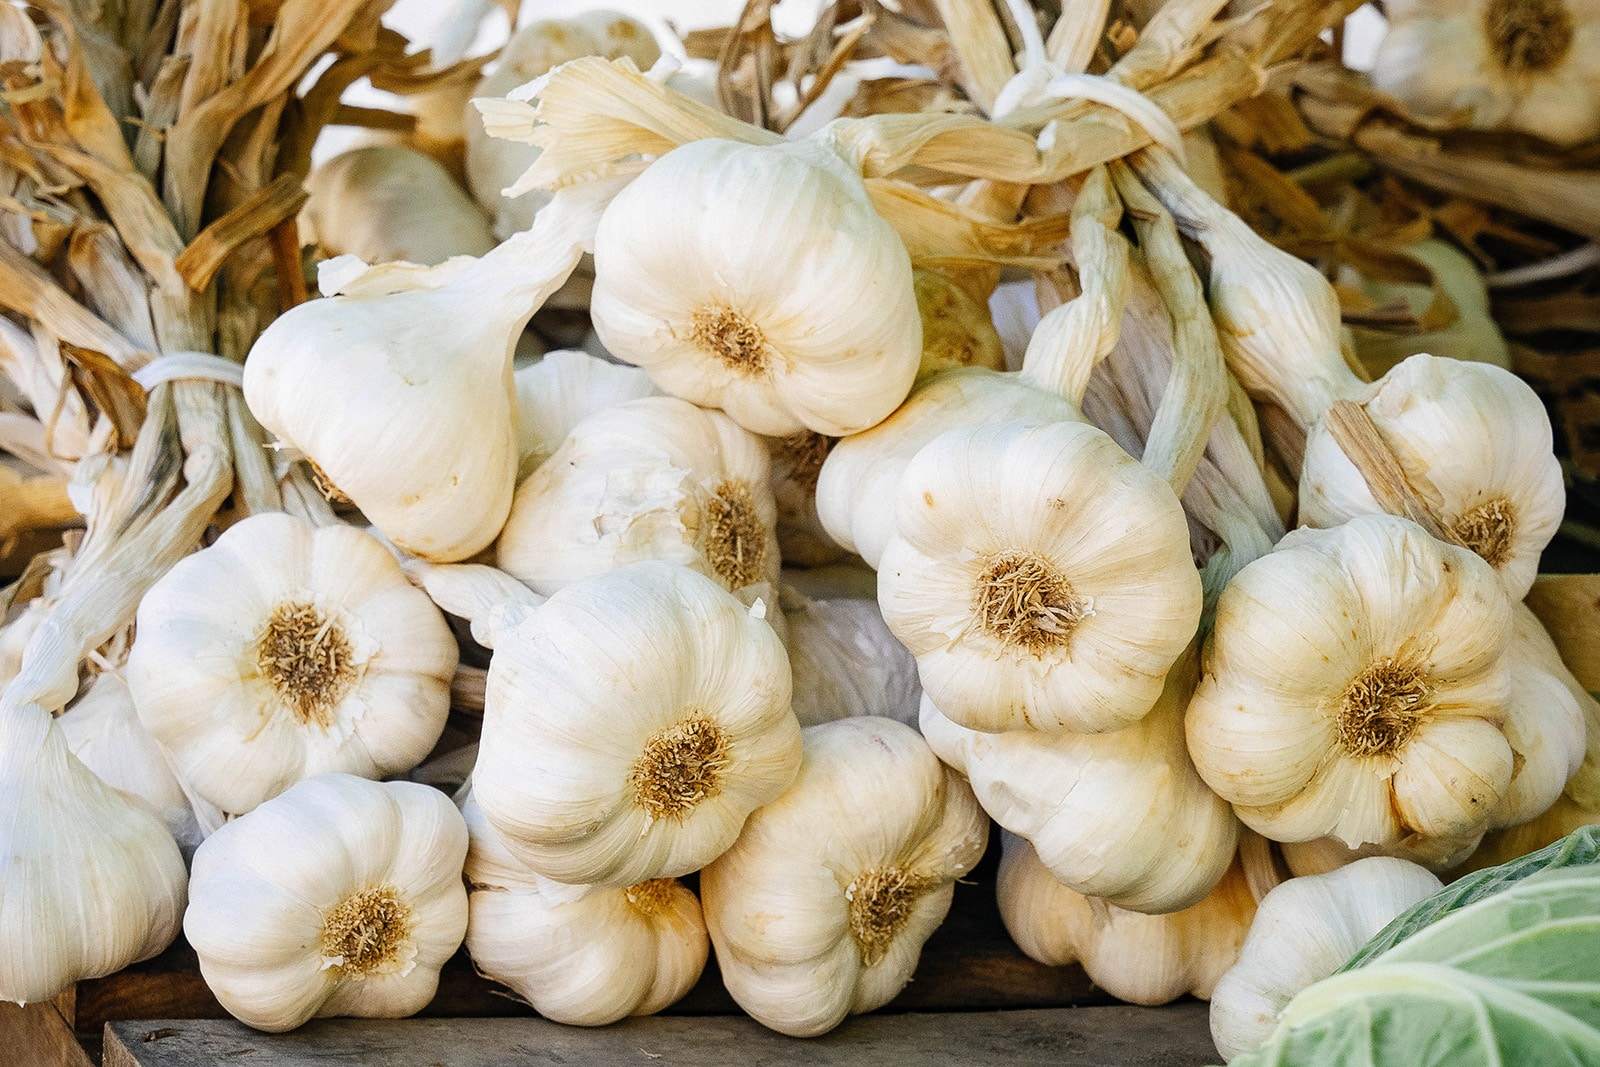 Bundles of newly harvested softneck garlic